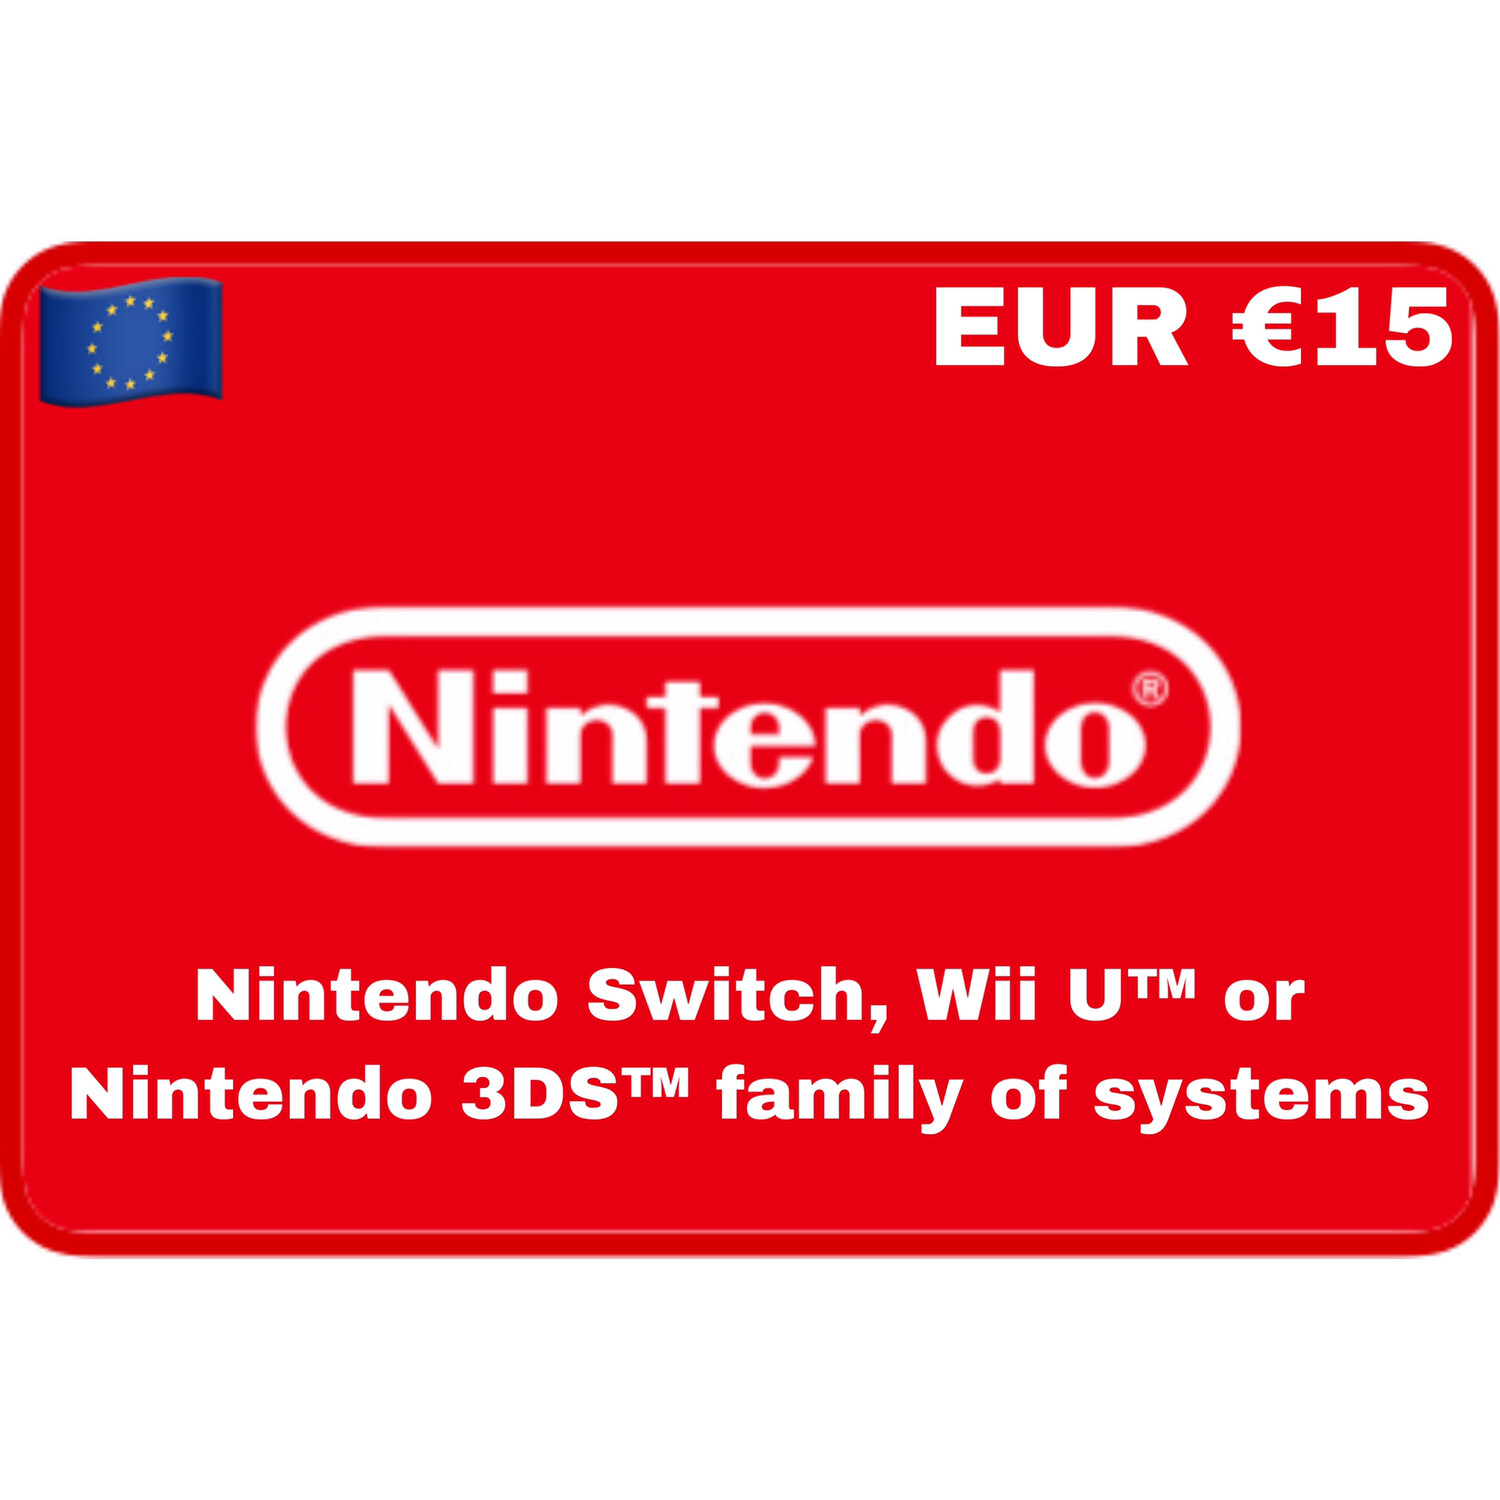 Nintendo eShop Europe EUR €15